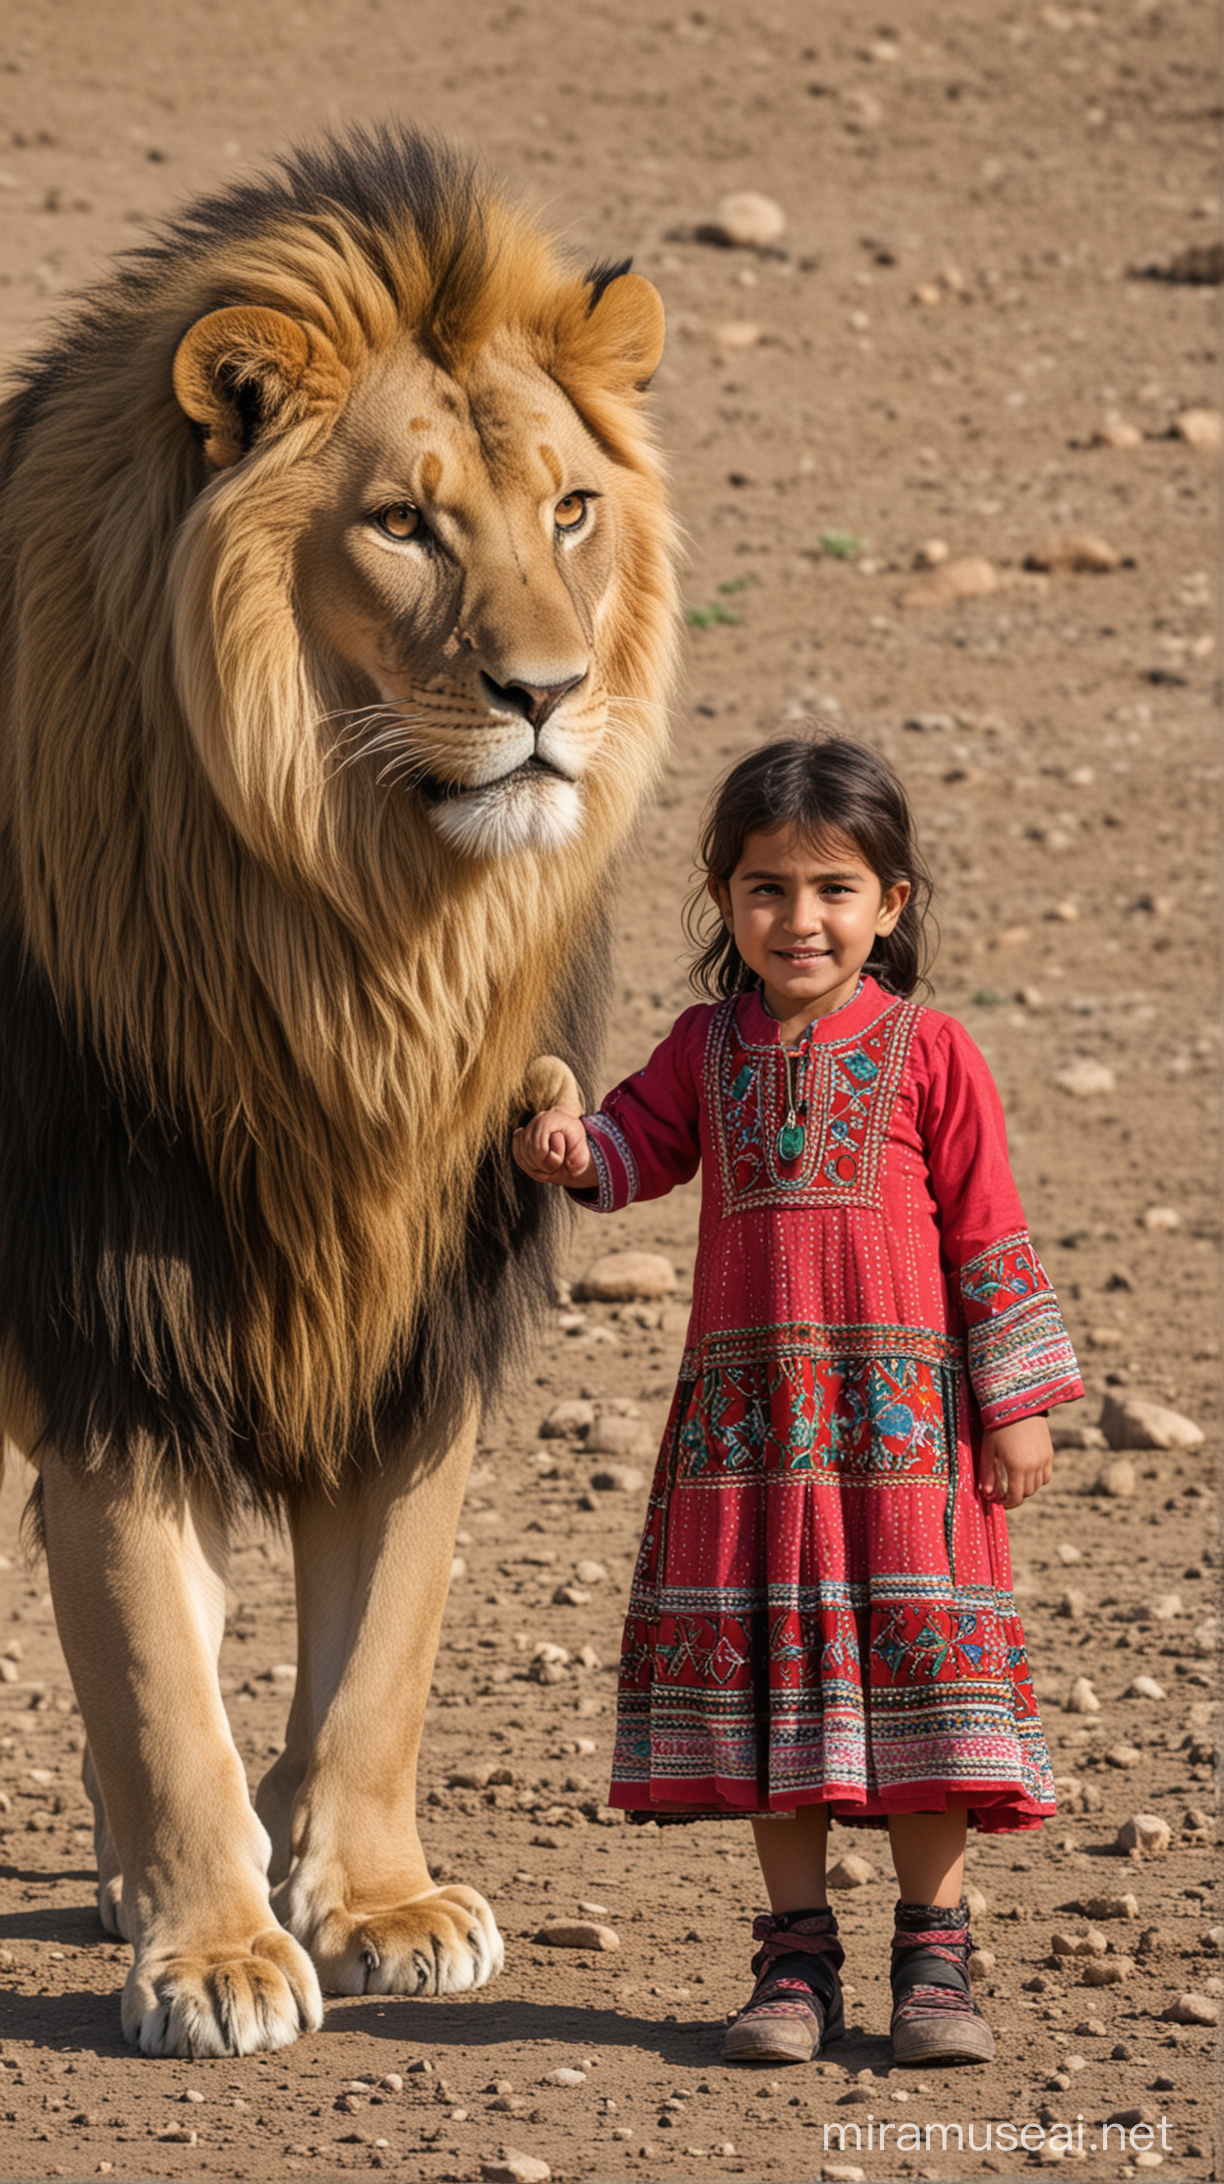 Cultural Fusion AfghanTajik Girl and Friendly Lion